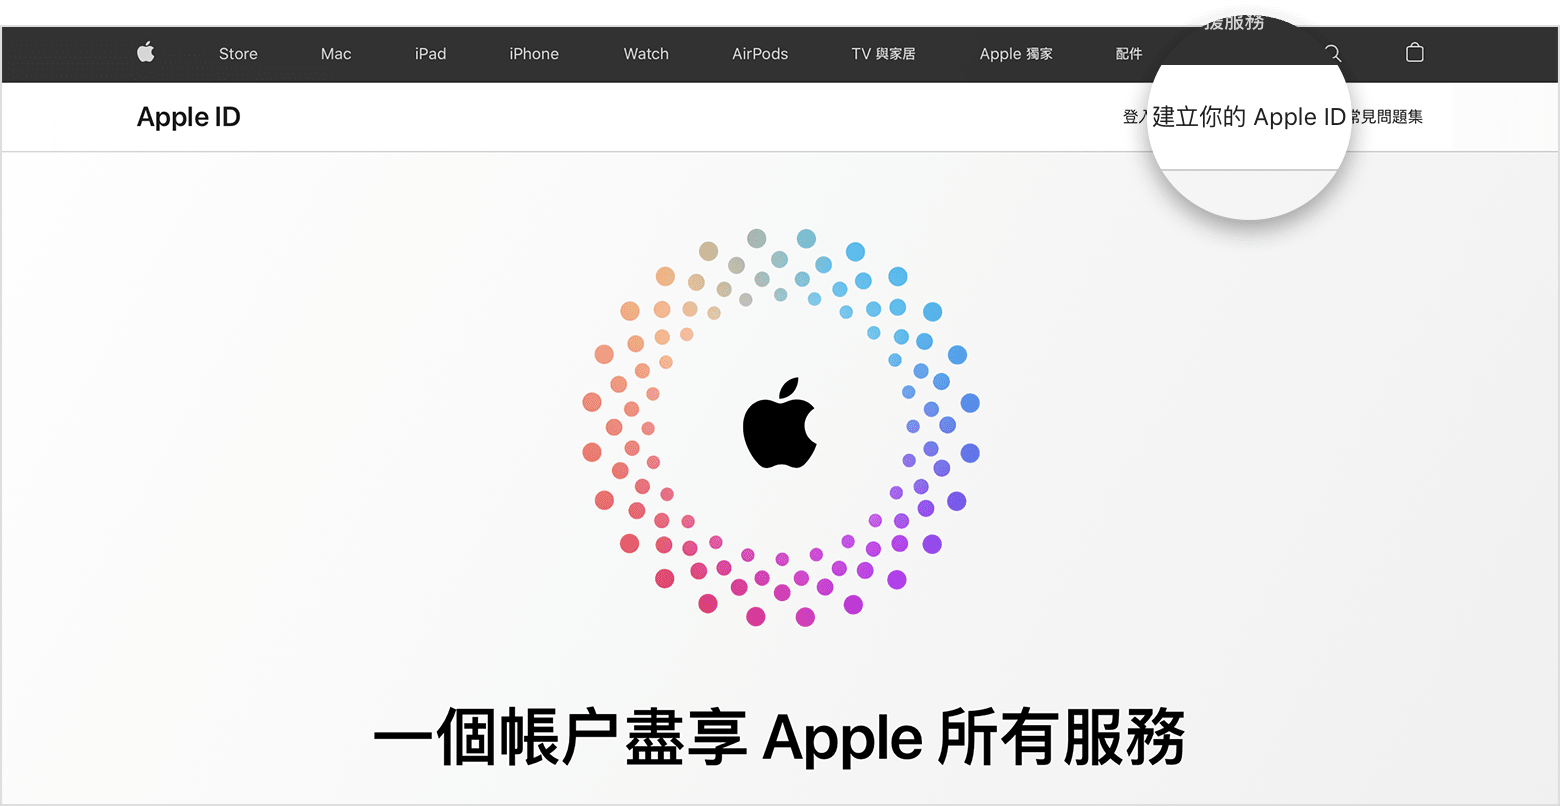 appleid.apple.com 螢幕截圖，畫面中央有 Apple 標誌，四周有彩色同心圓。